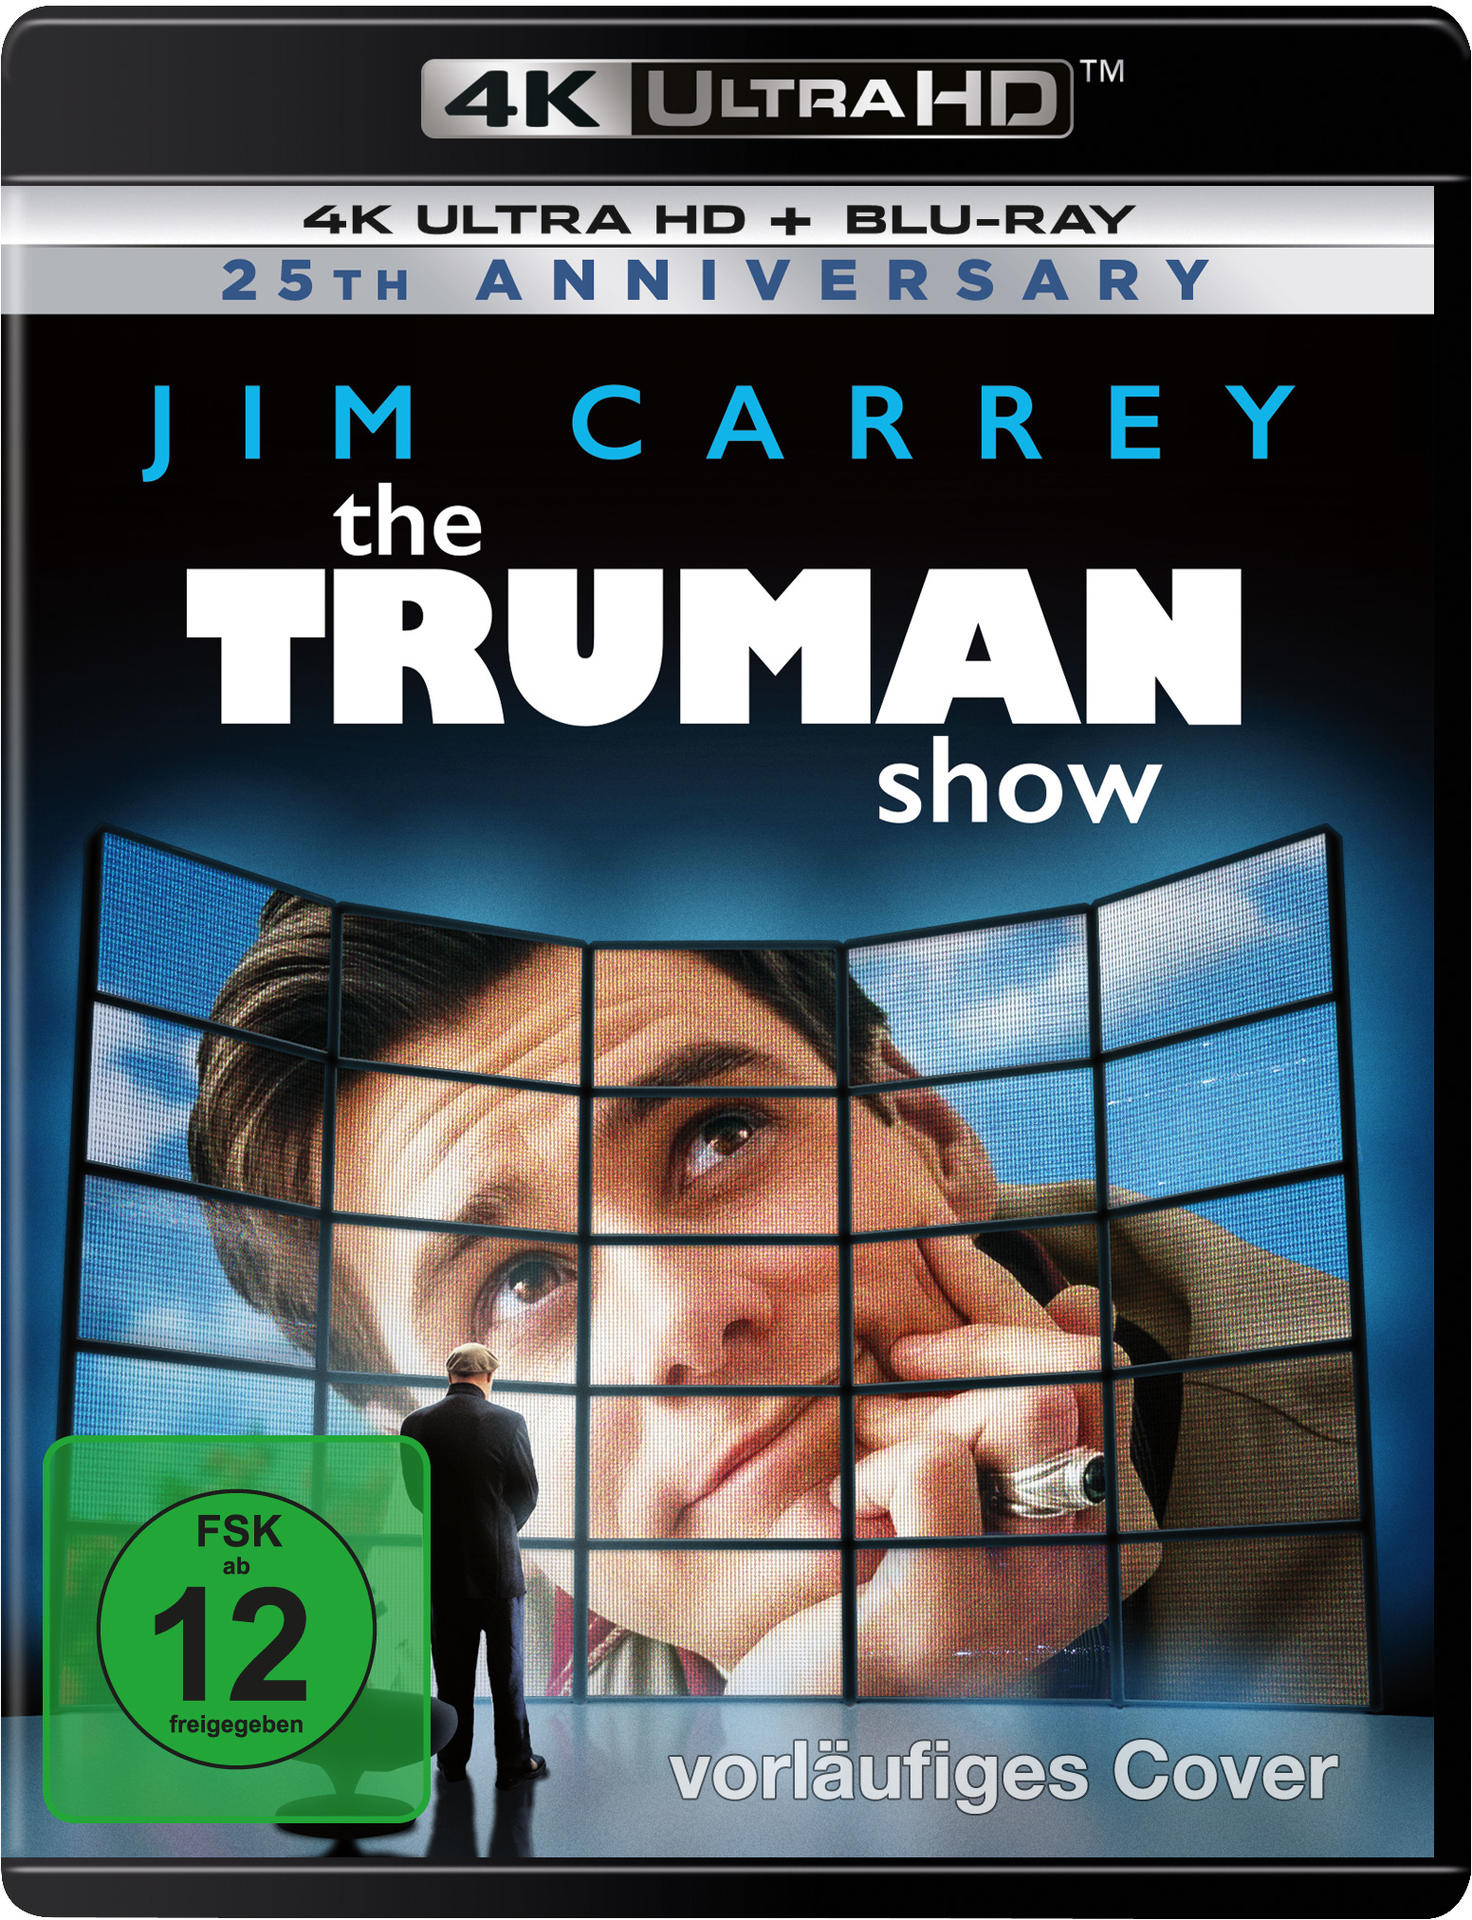 Die Truman Show 4K Ultra HD Blu-ray + Blu-ray